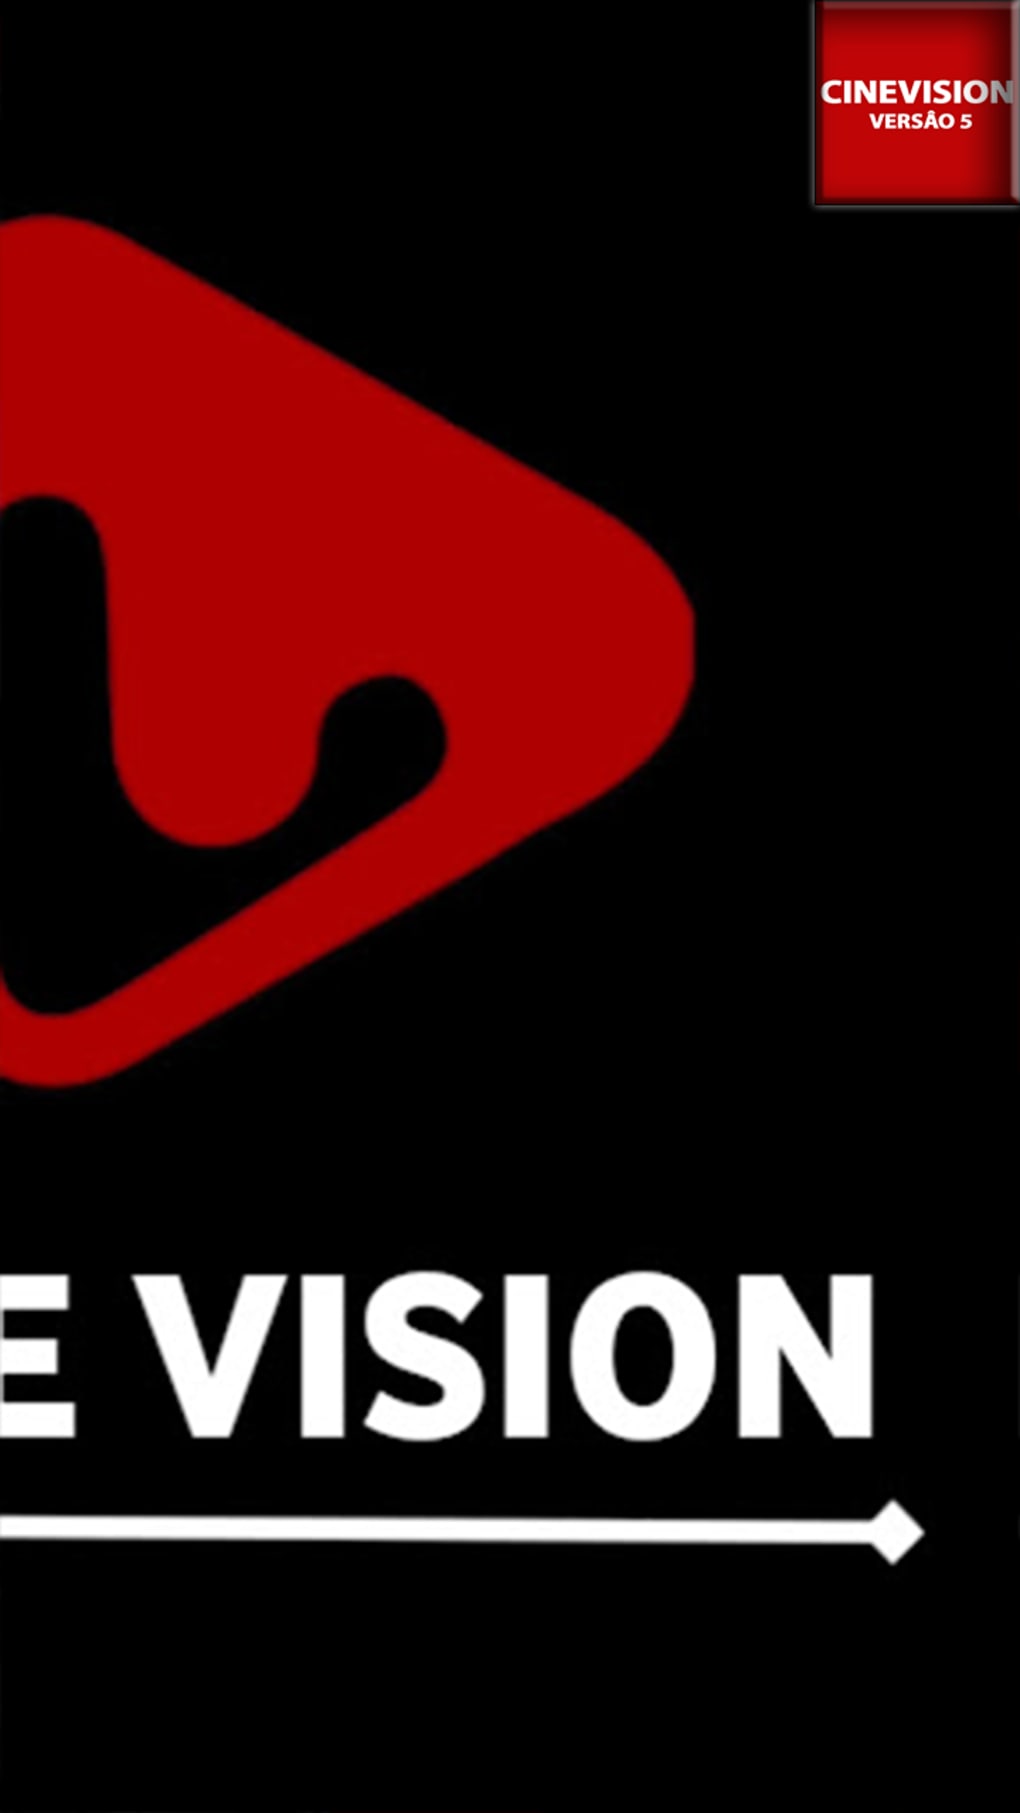 Assistir Séries Online Gratis - Cine Vision